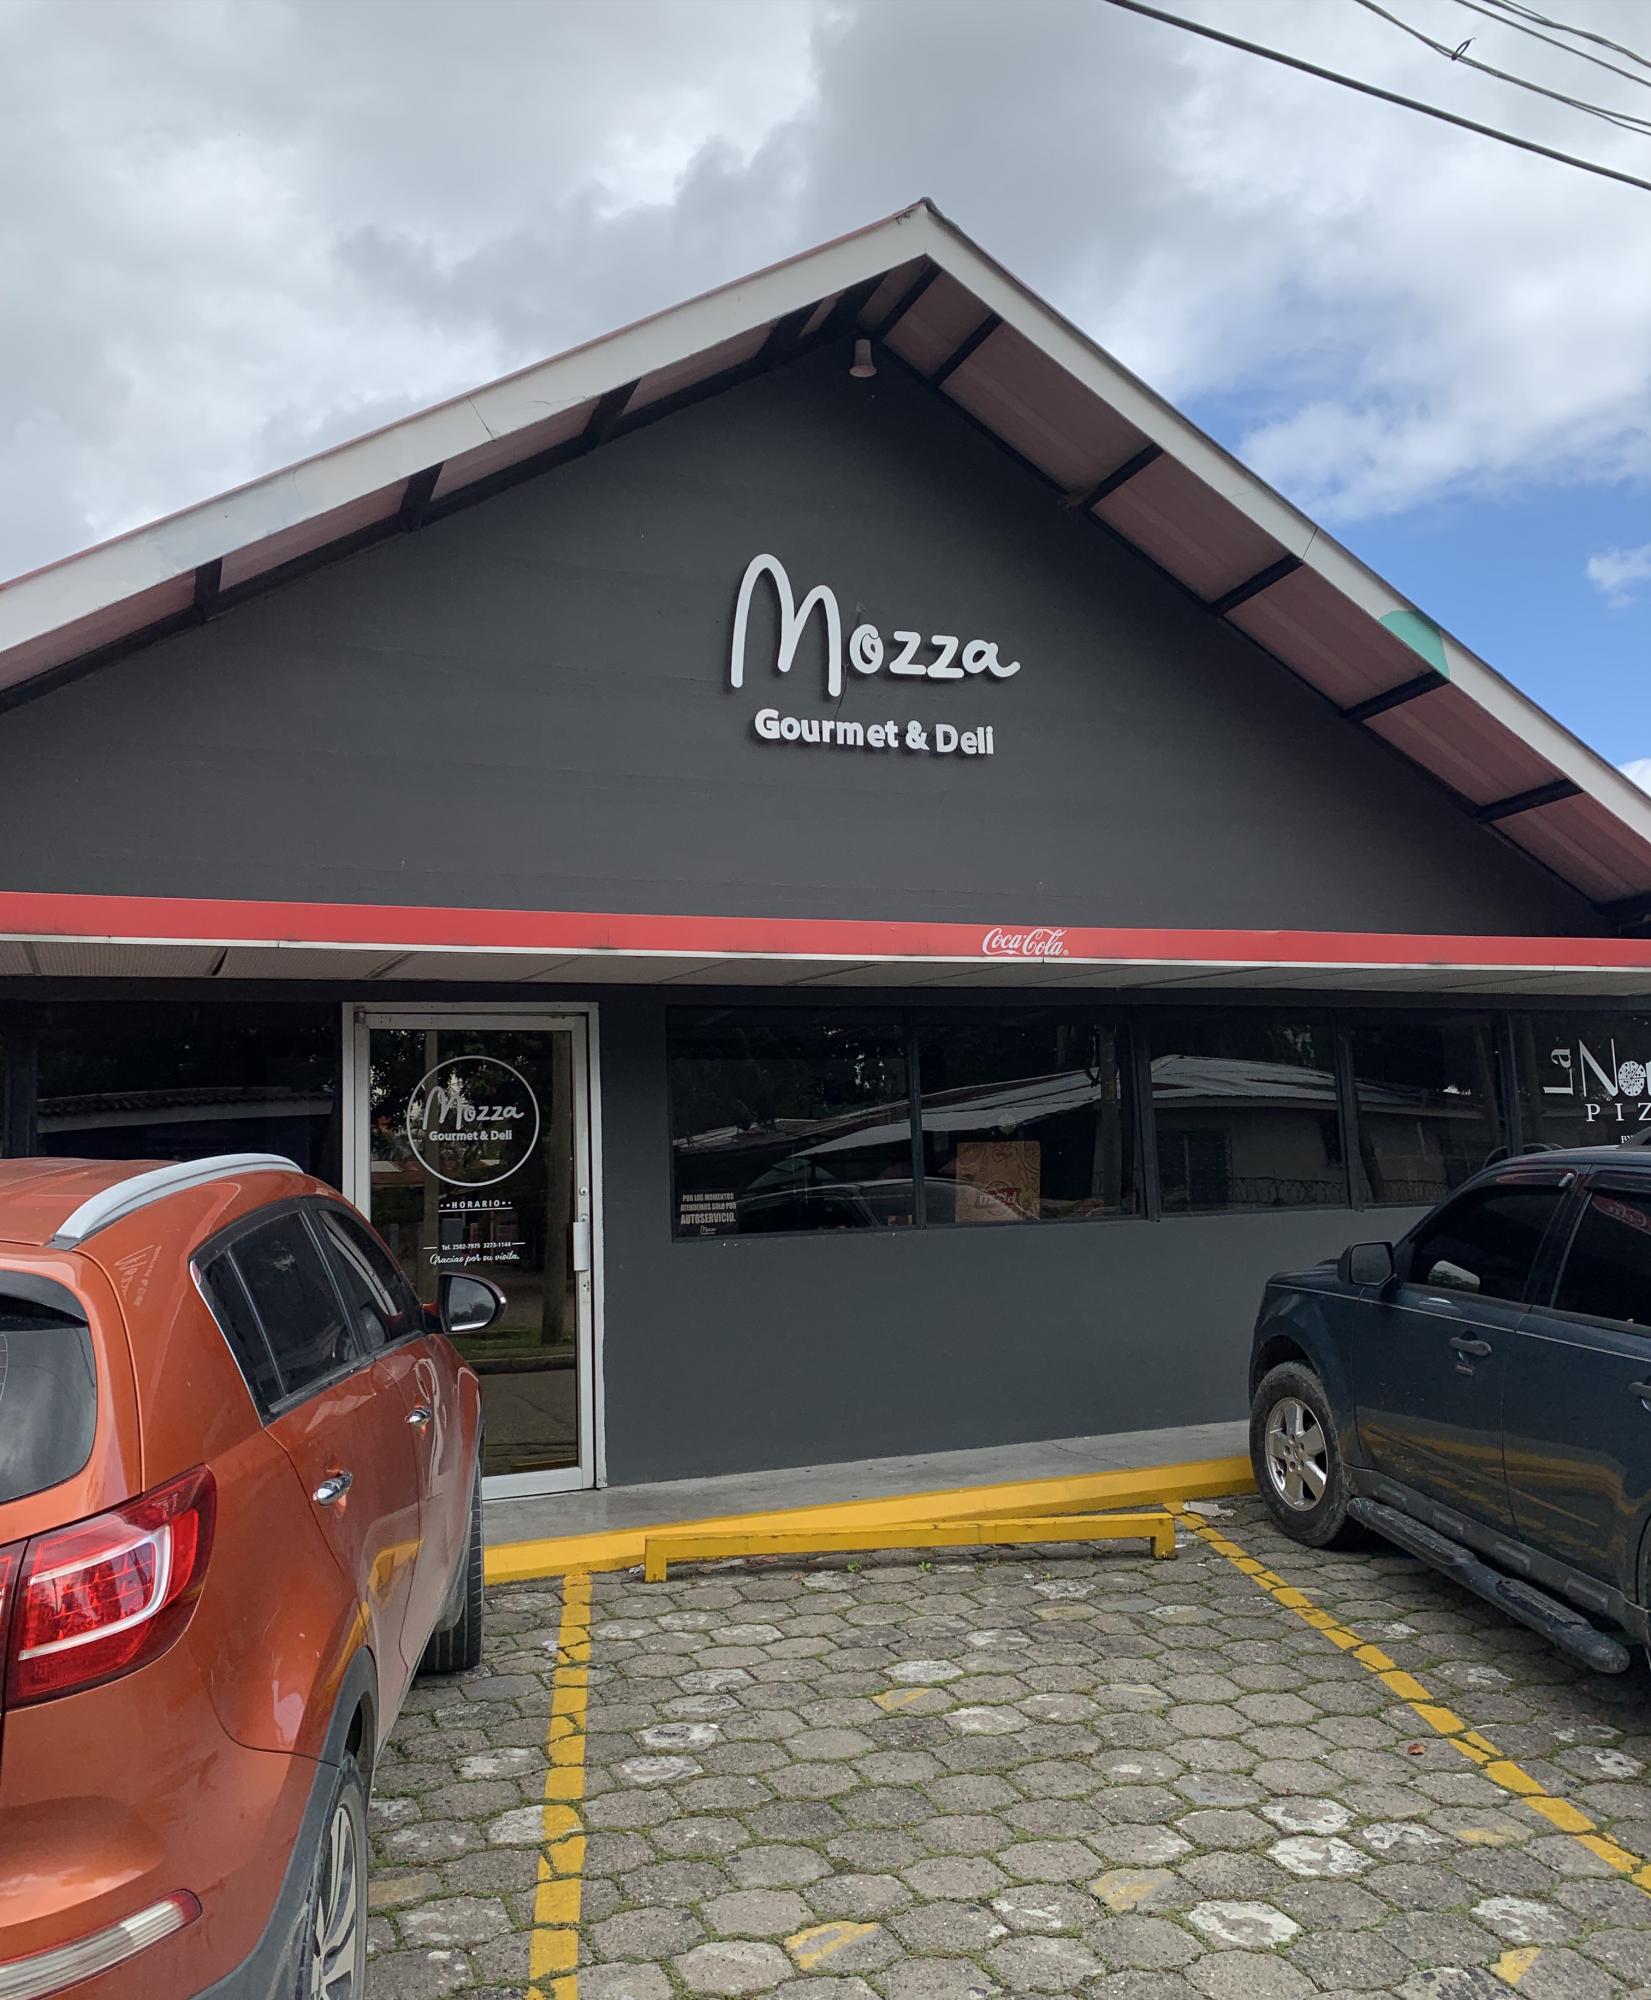 Mozza Gourmet está en Barrio Río de Piedras, 4 calle, 17 avenida, media cuadra abajo de Artisam.